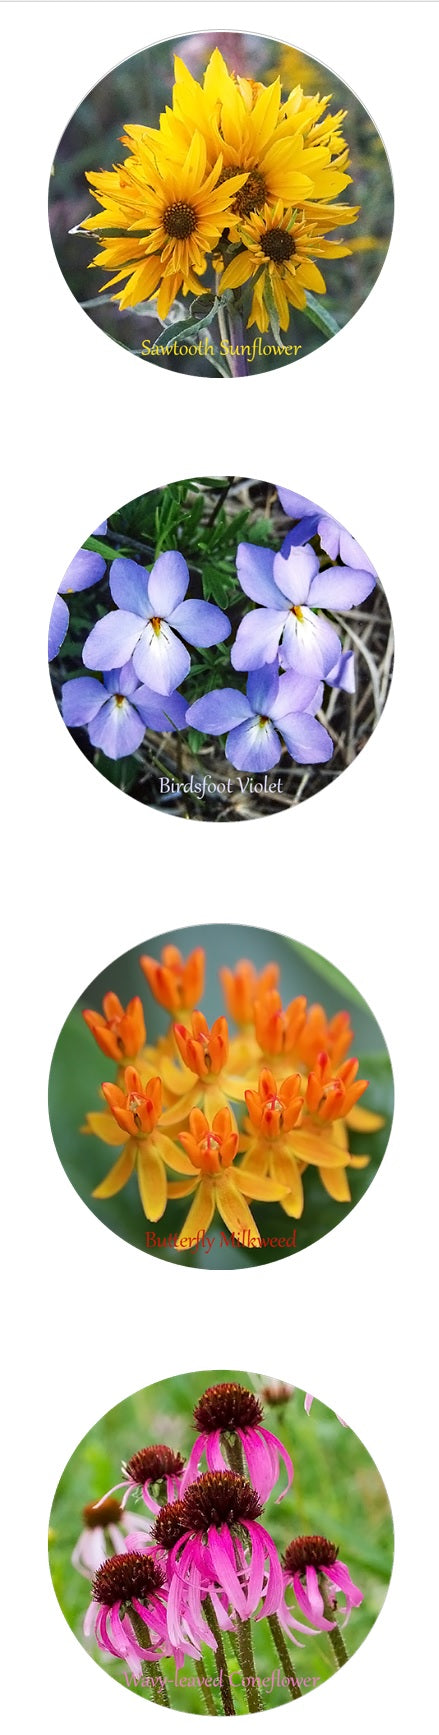 Stickers: Midwest Prairie Wildflowers